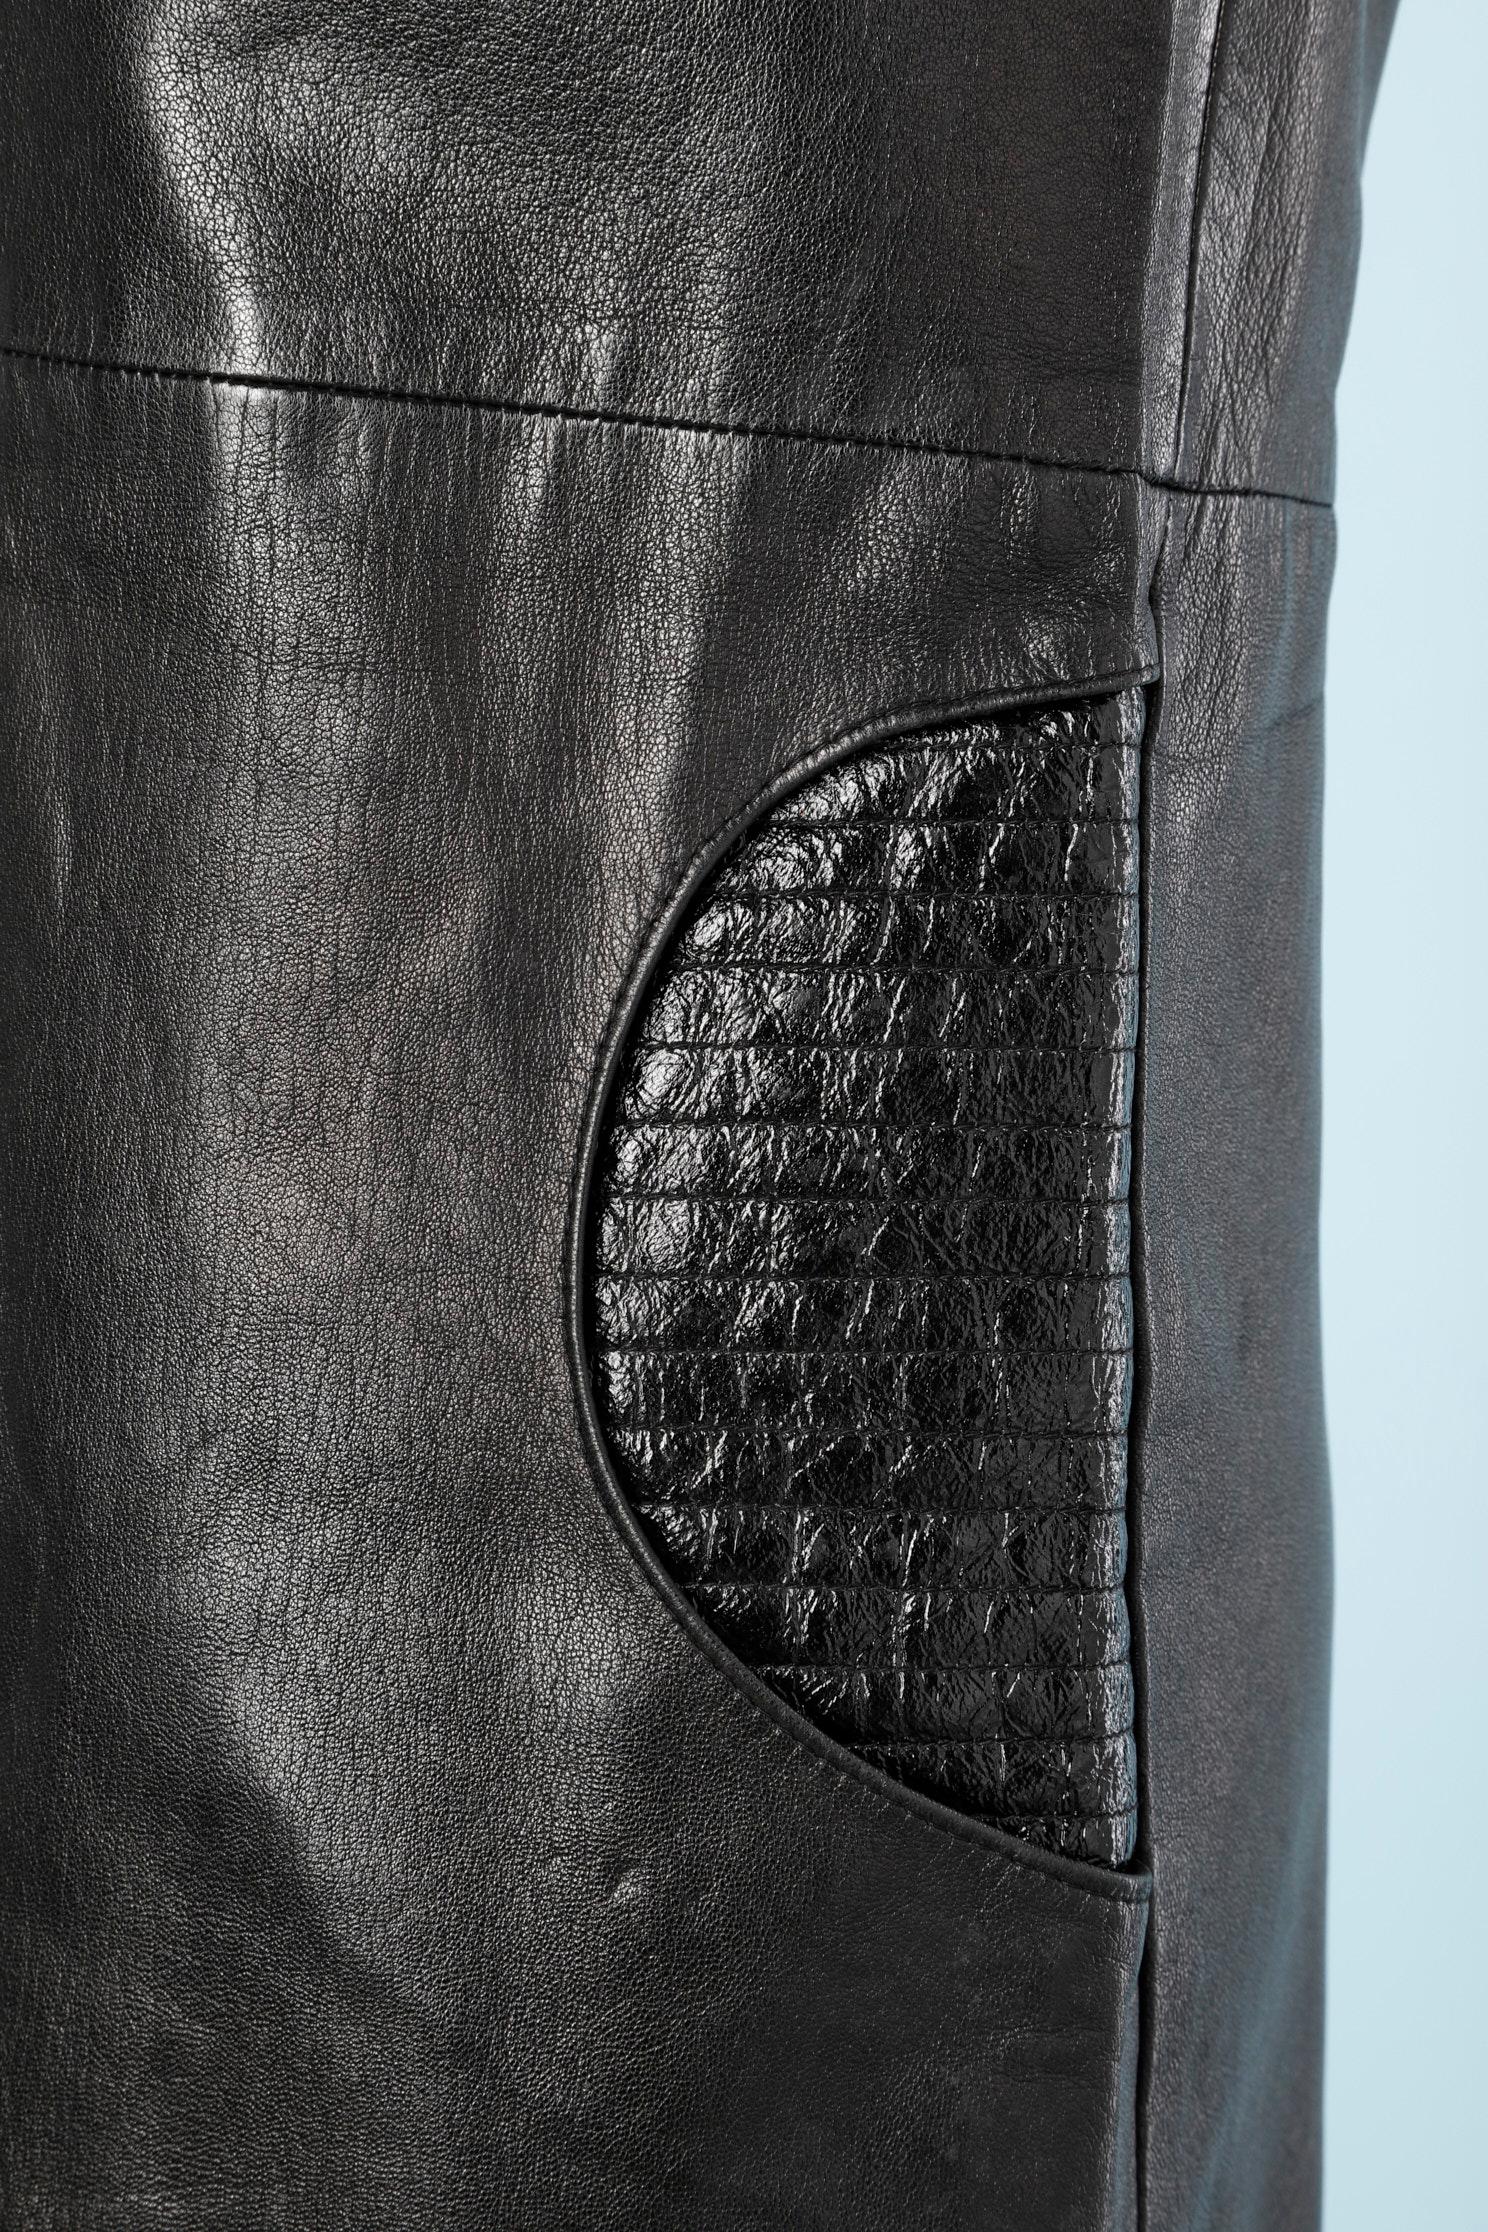 Black leather dress Pierre Cardin  In Good Condition For Sale In Saint-Ouen-Sur-Seine, FR